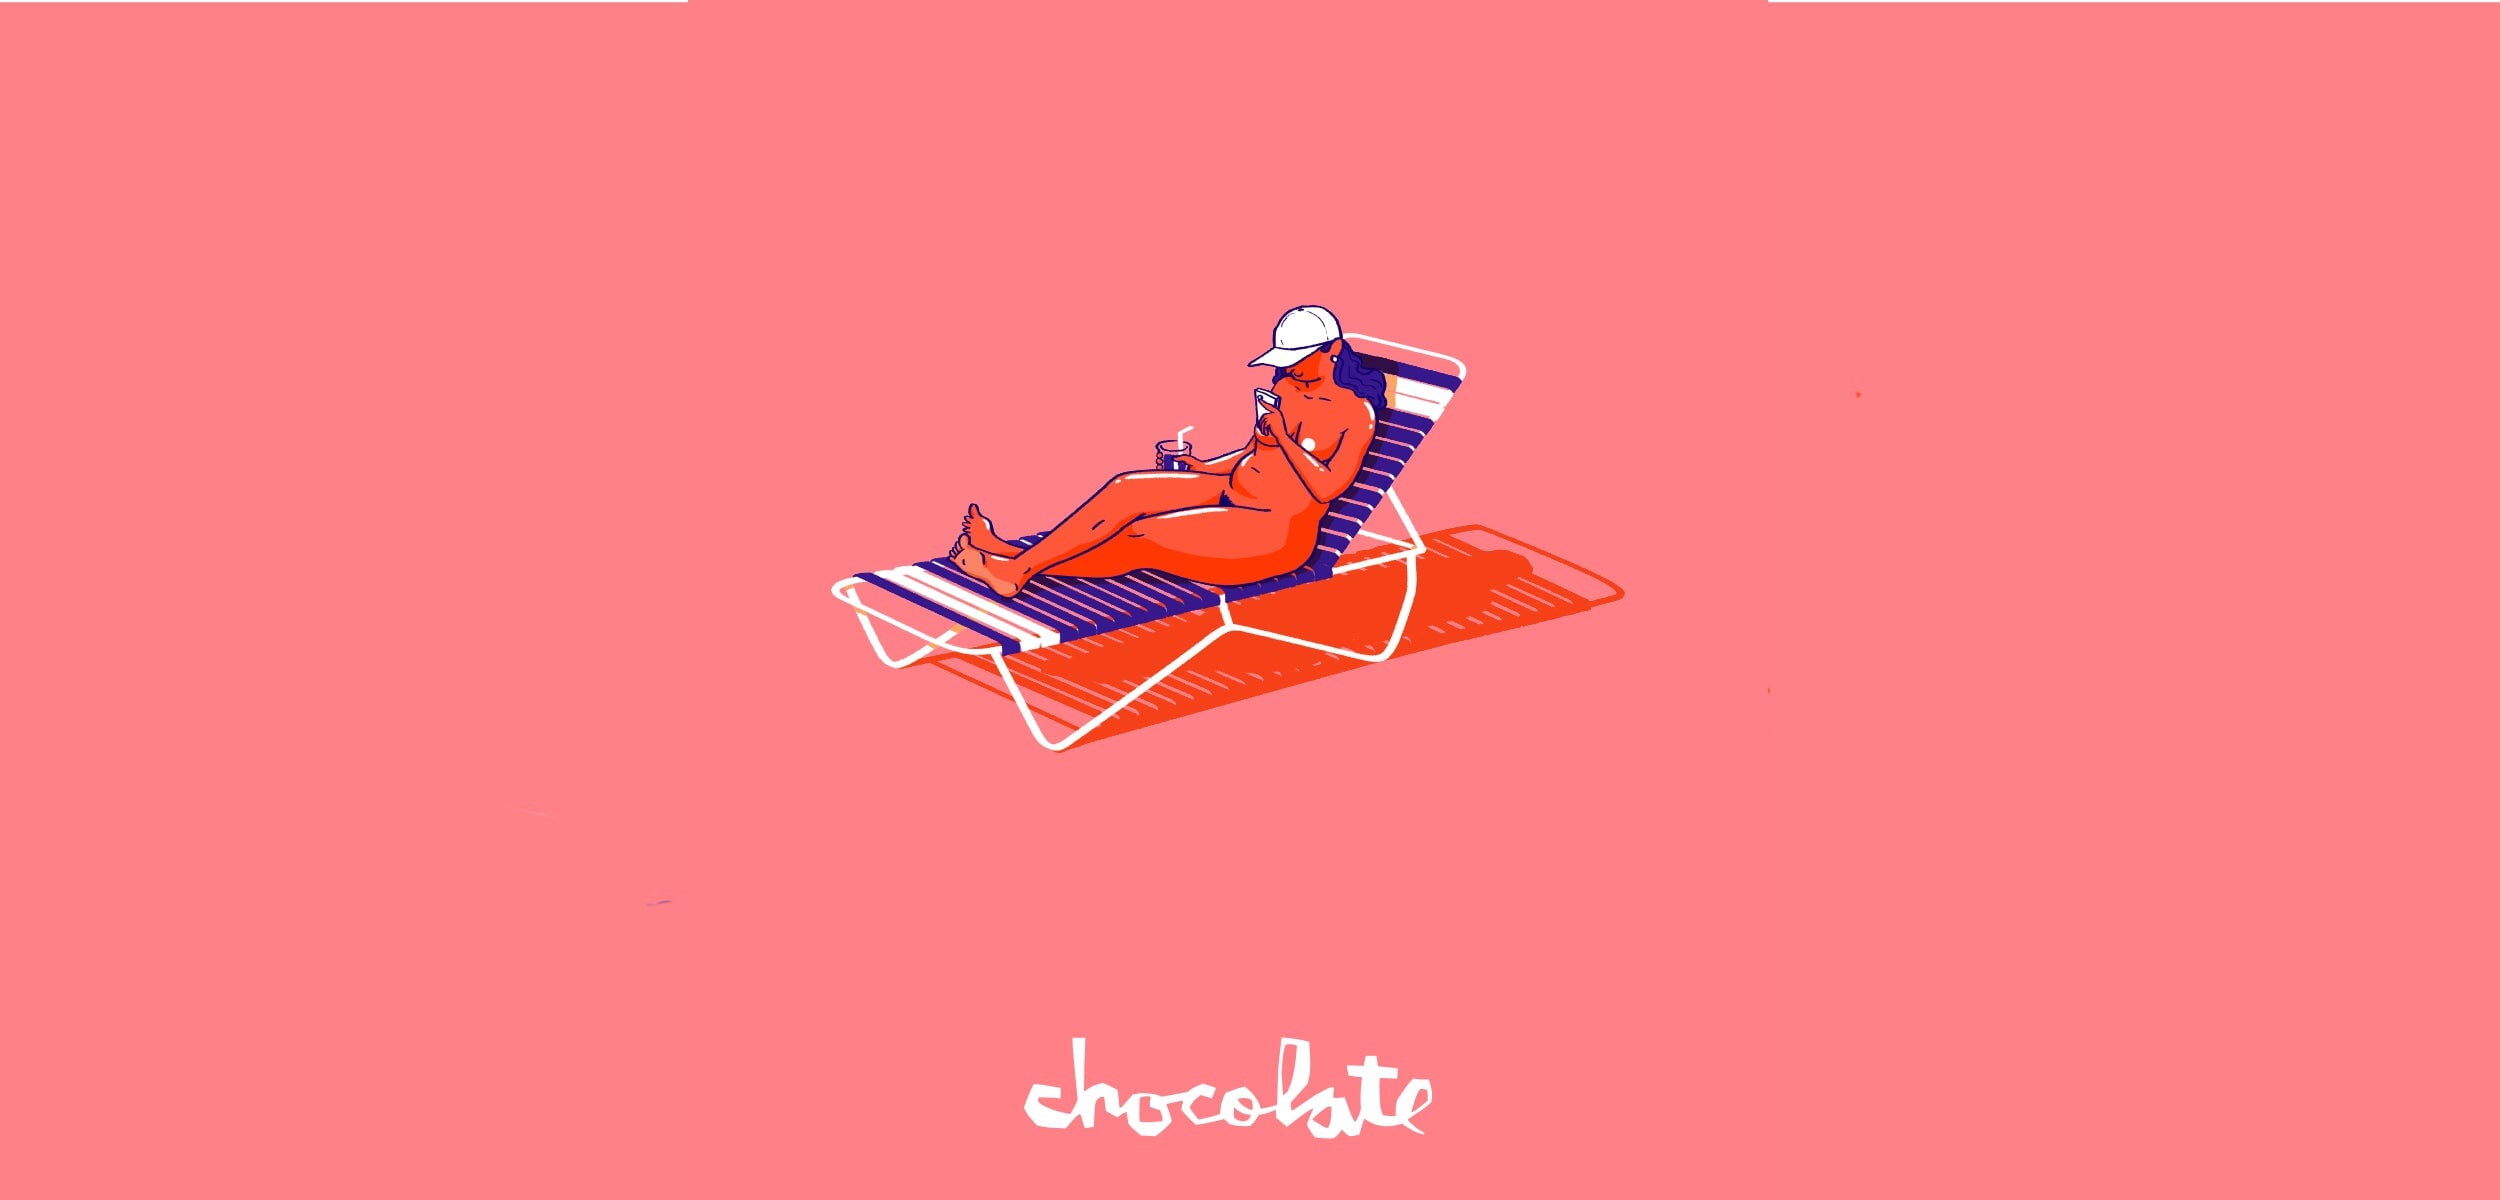 Chocolate Skateboards